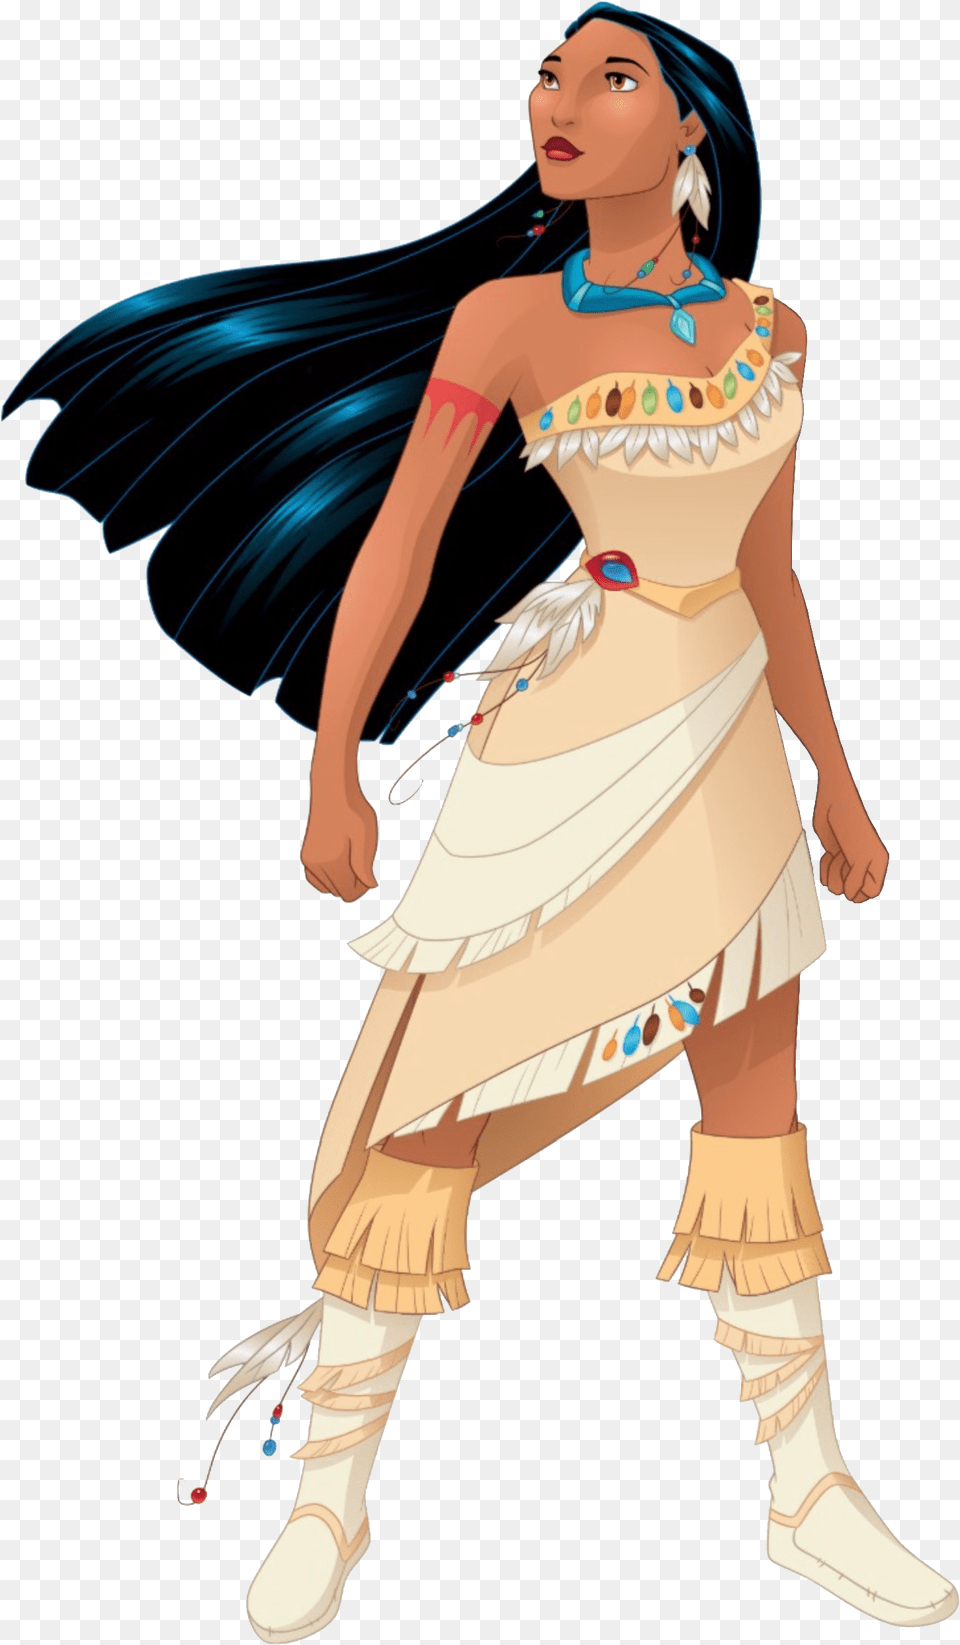 Pocahontas Background Princesas Disney Pocahontas, Woman, Adult, Person, Female Png Image